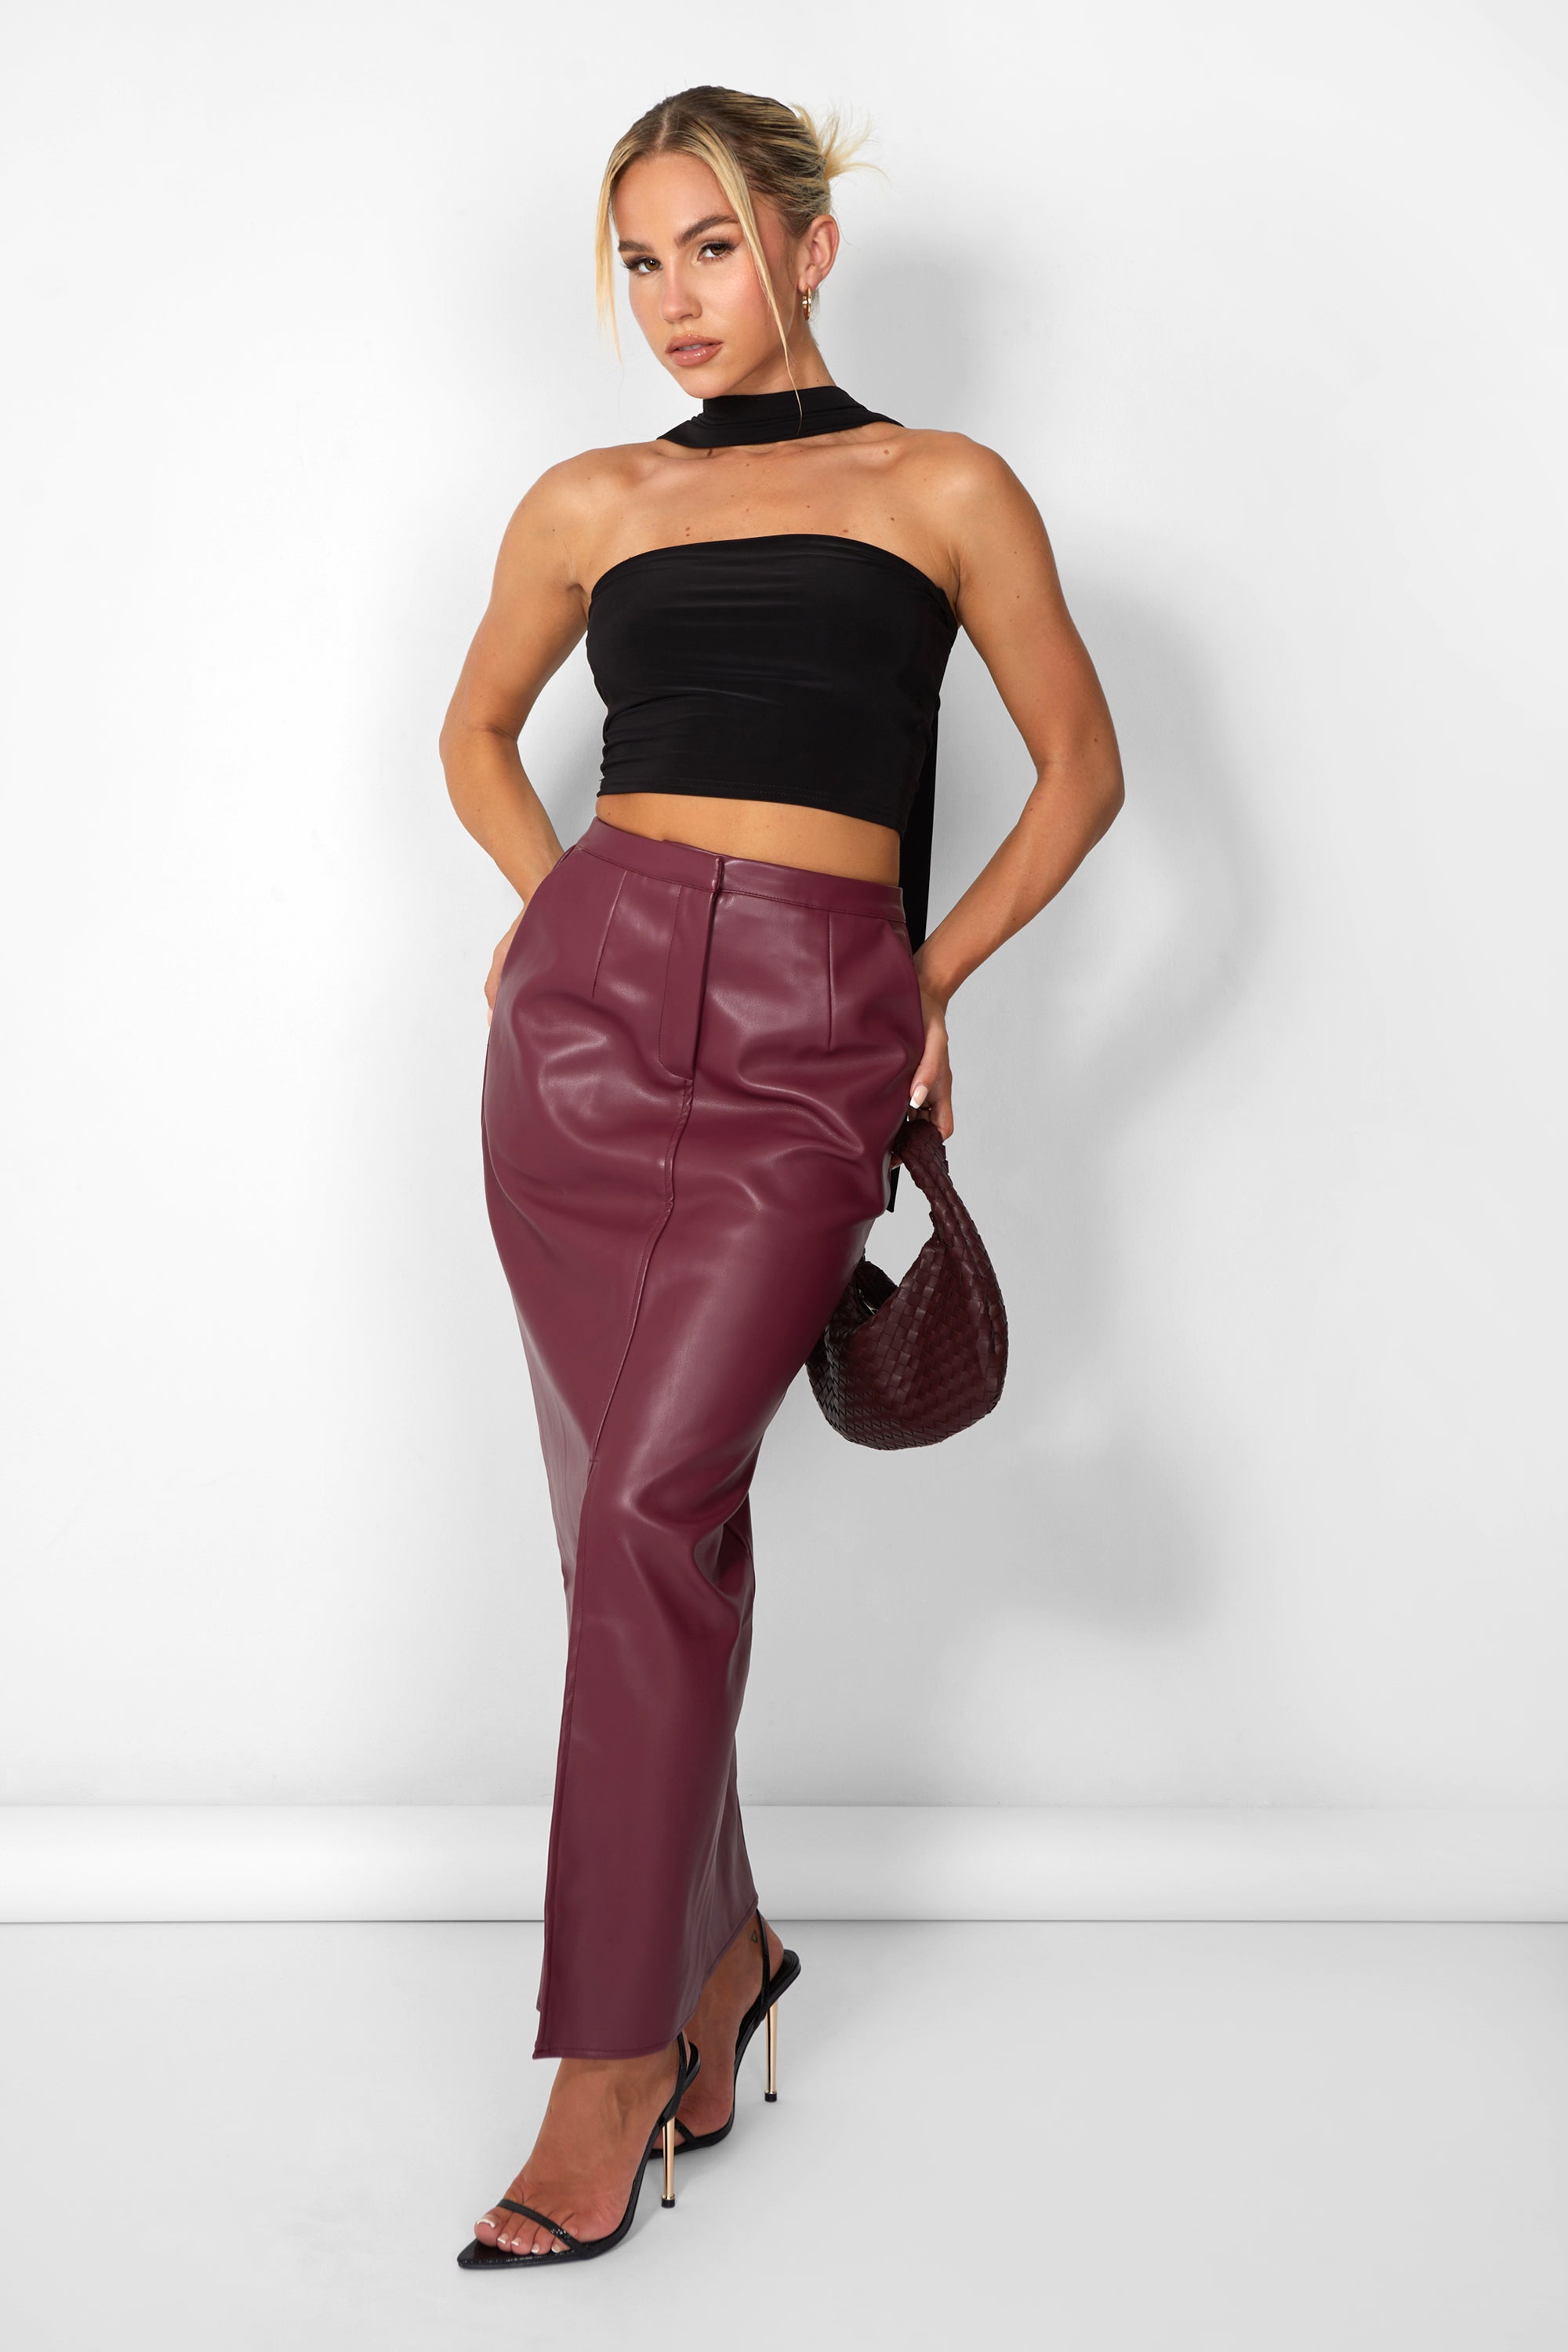 Image of Kaiia Leather Look Maxi Skirt in Burgundy